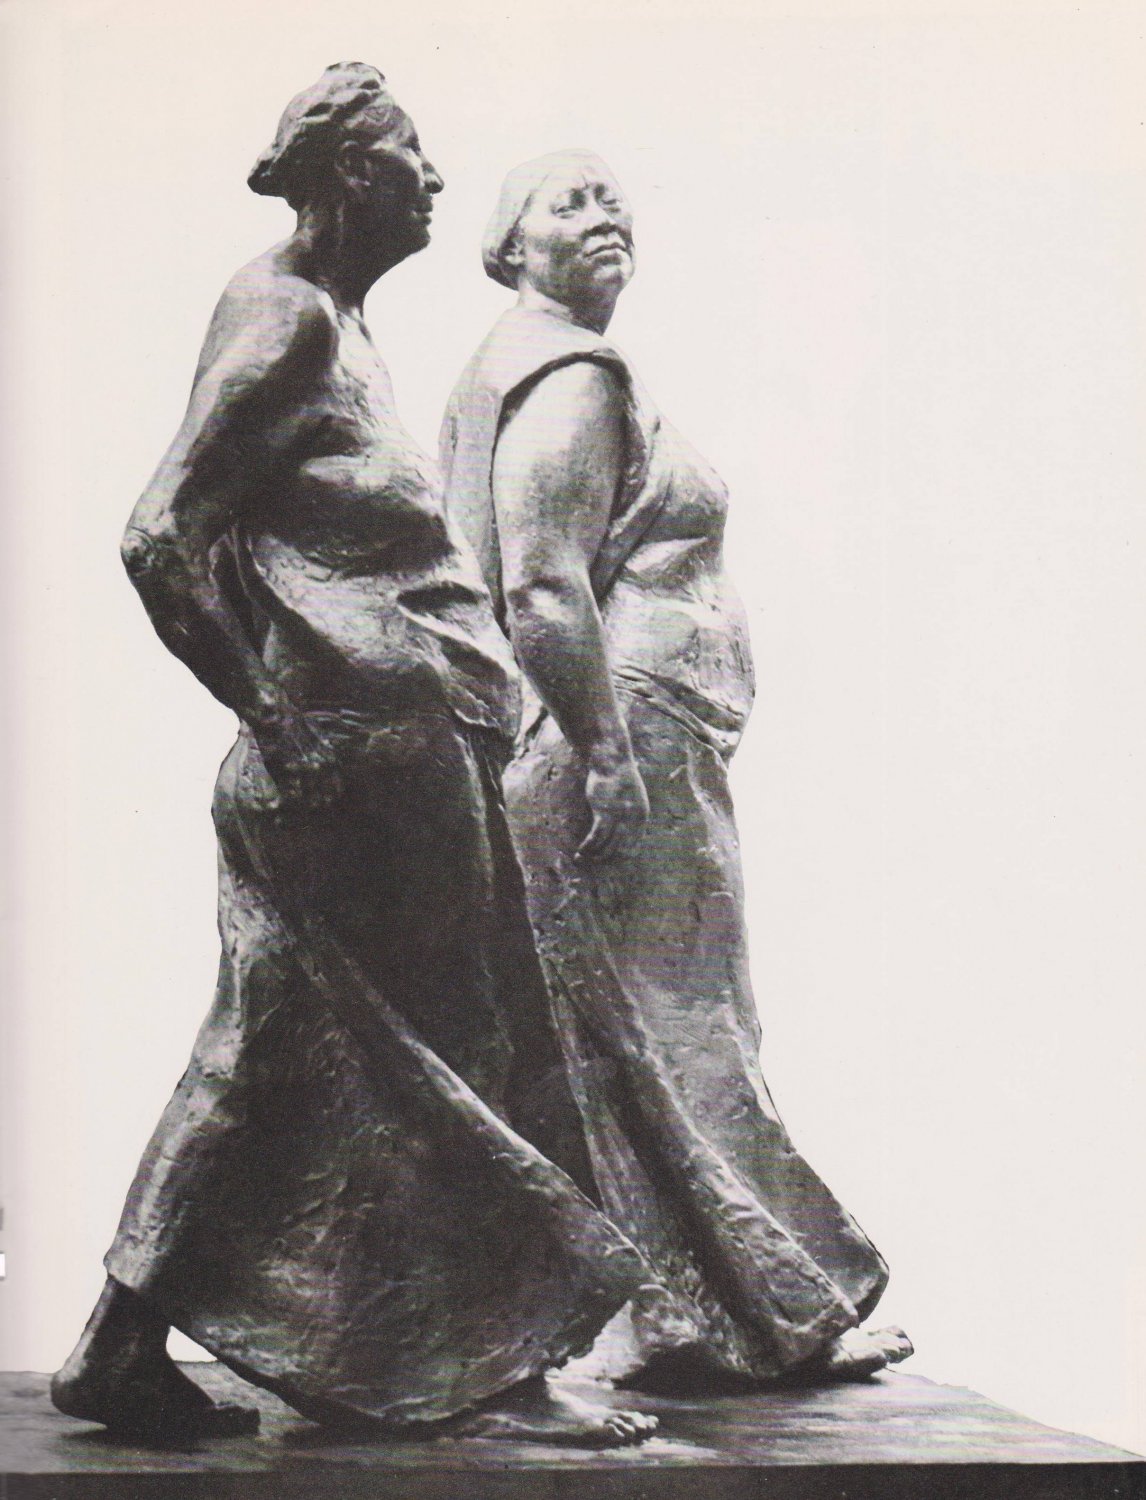 ZUNIGA, Francisco:  Francisco Zuniga. Sculpture / Drawings. October 5, 1981. 